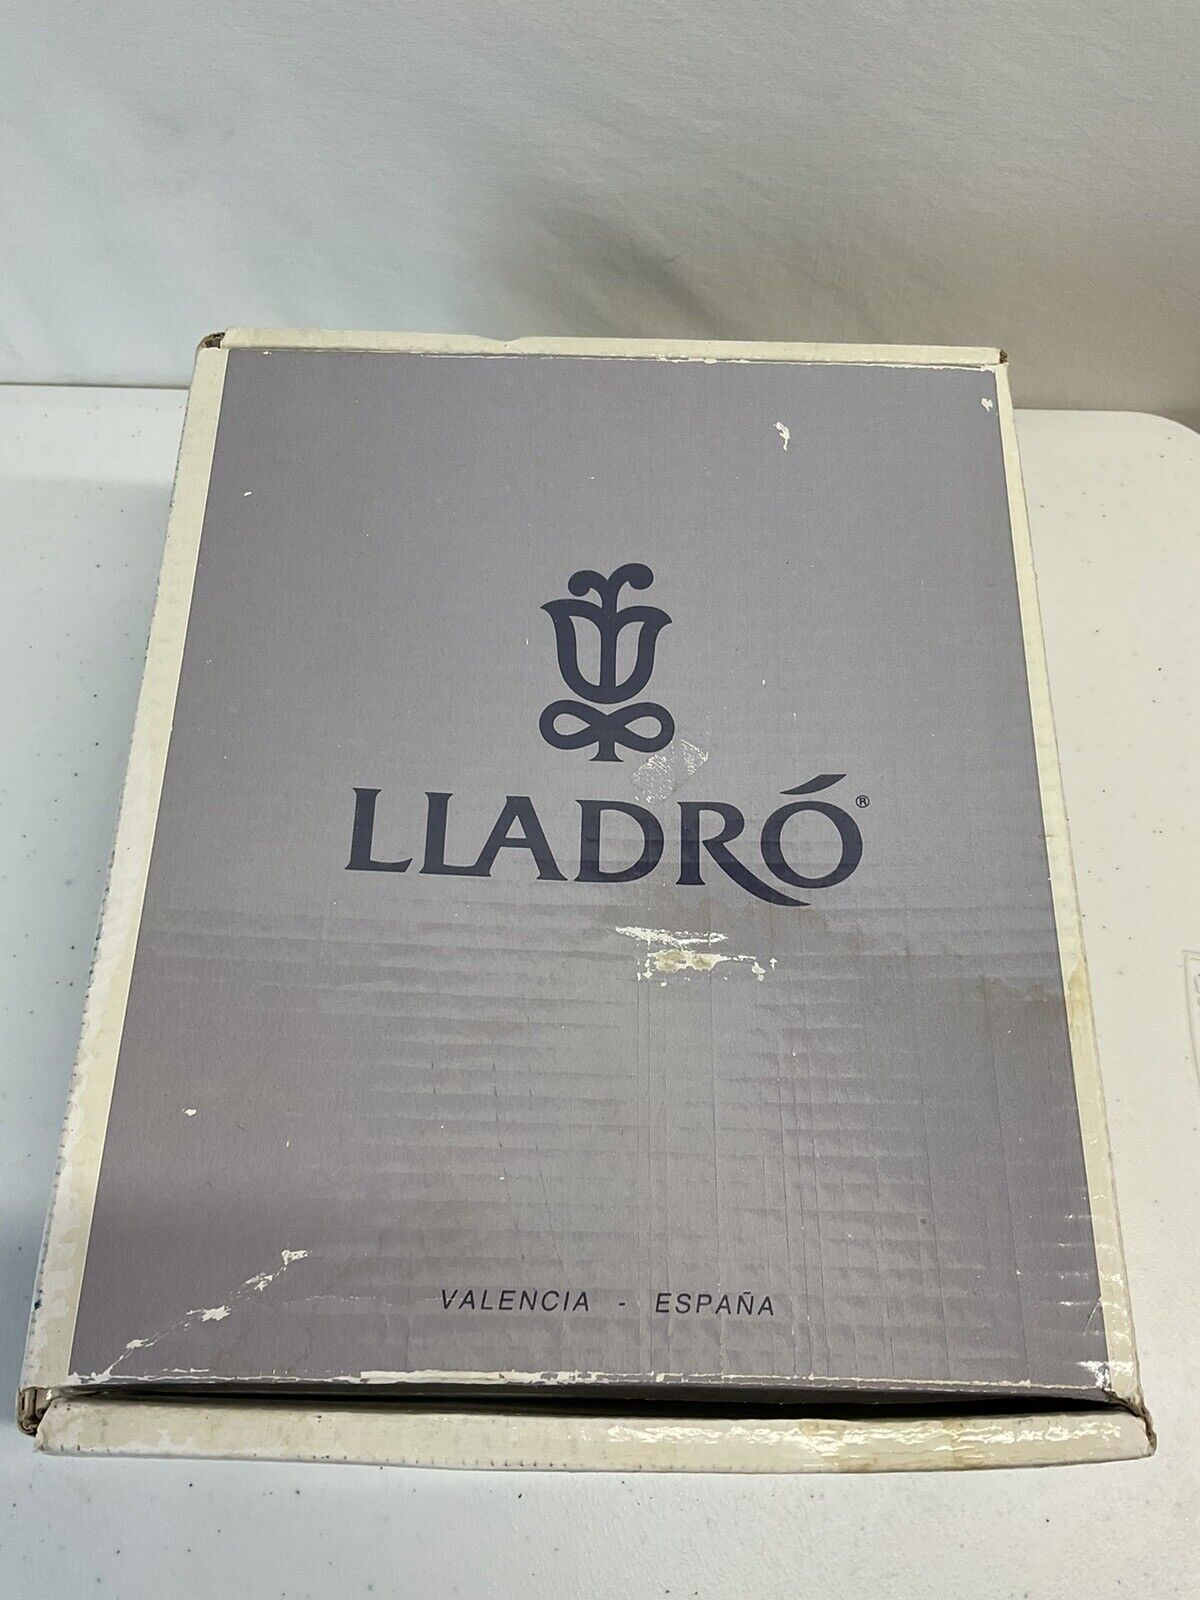 Lladro 5050 Dancer in Mint Condition Exquisite Porcelain Figurine Original Box